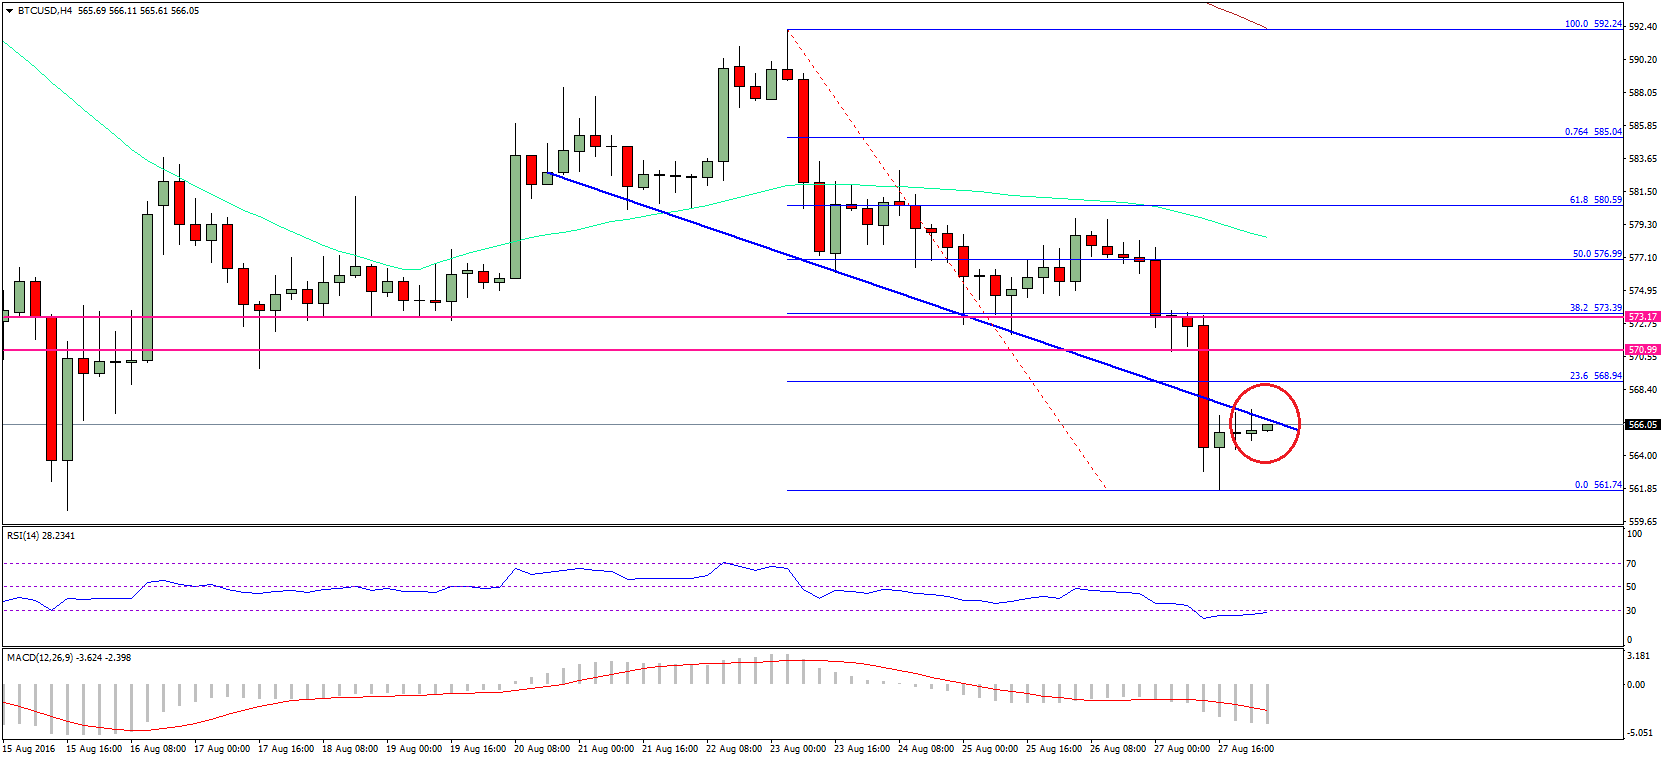 Bitcoin Price Weekly Analysis –BTC/USD Remains Under Pressure